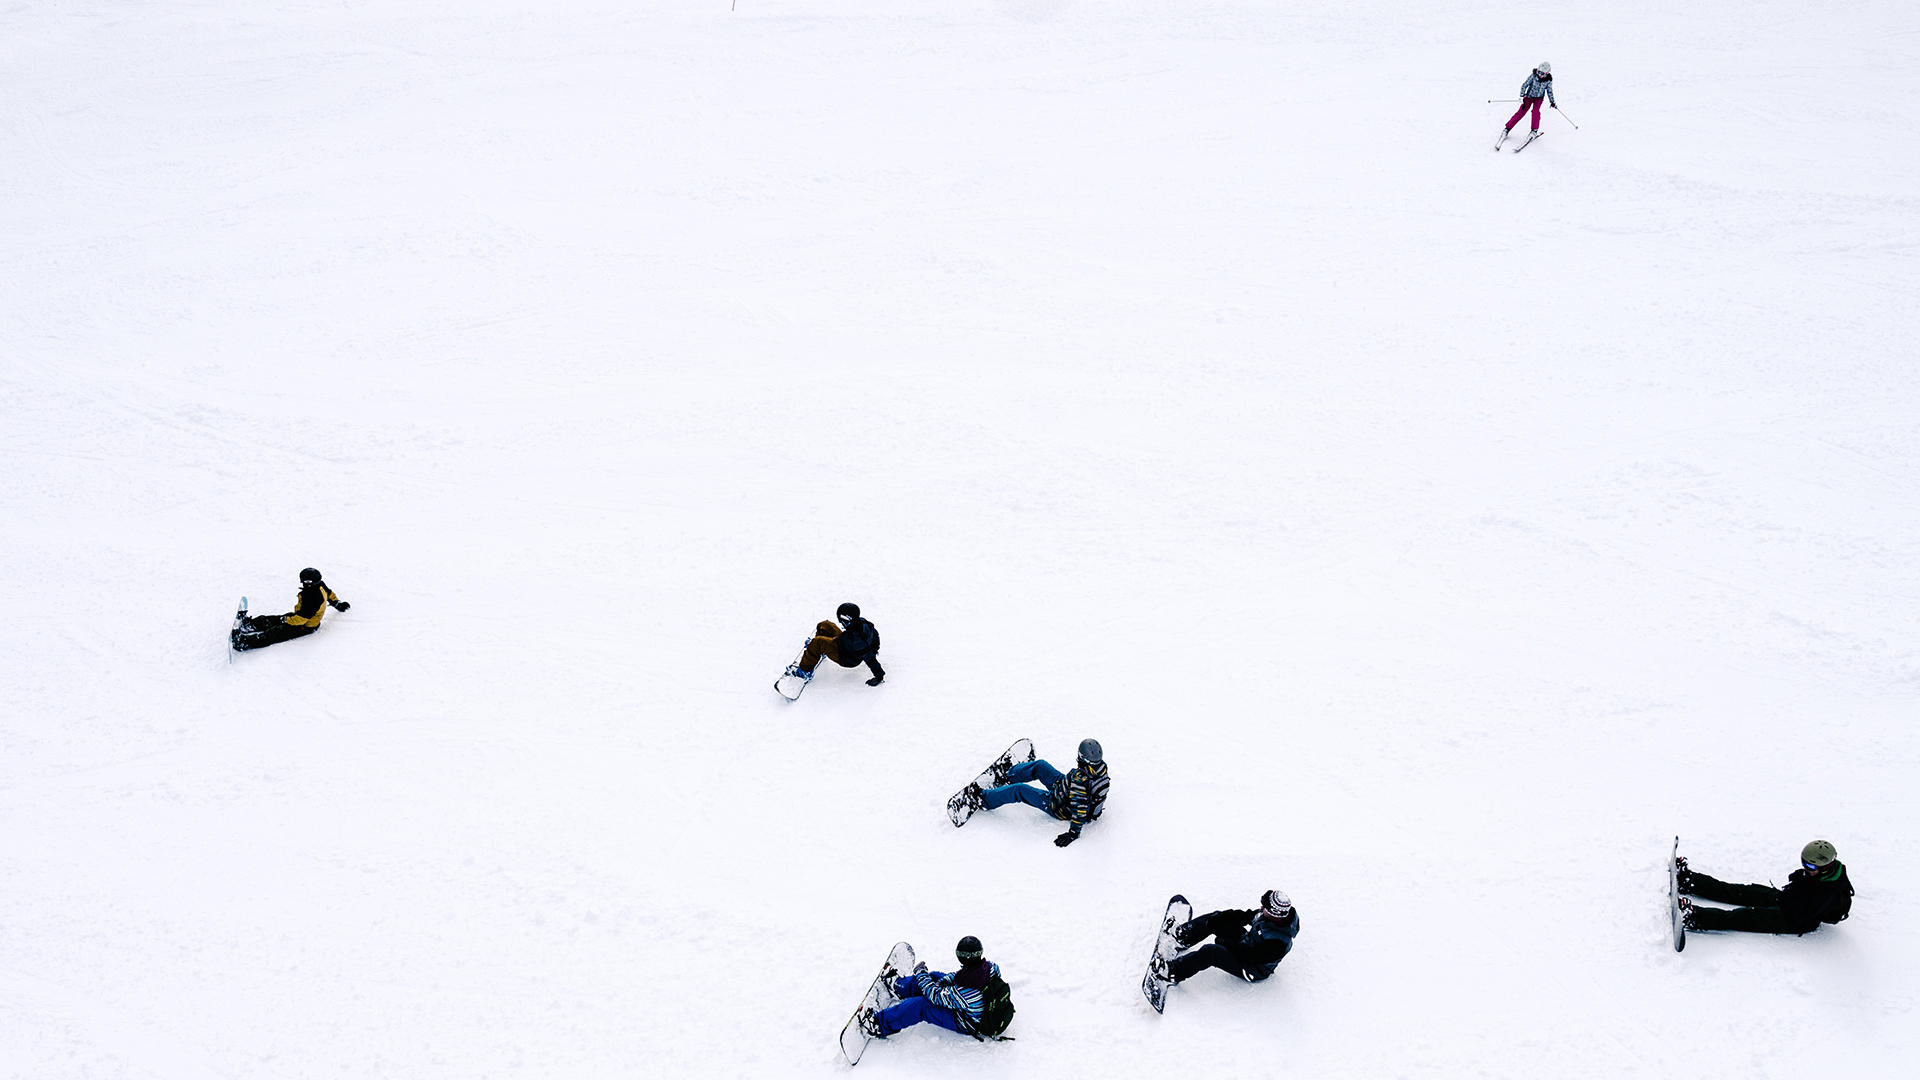 wintersportblessures, snowboarders